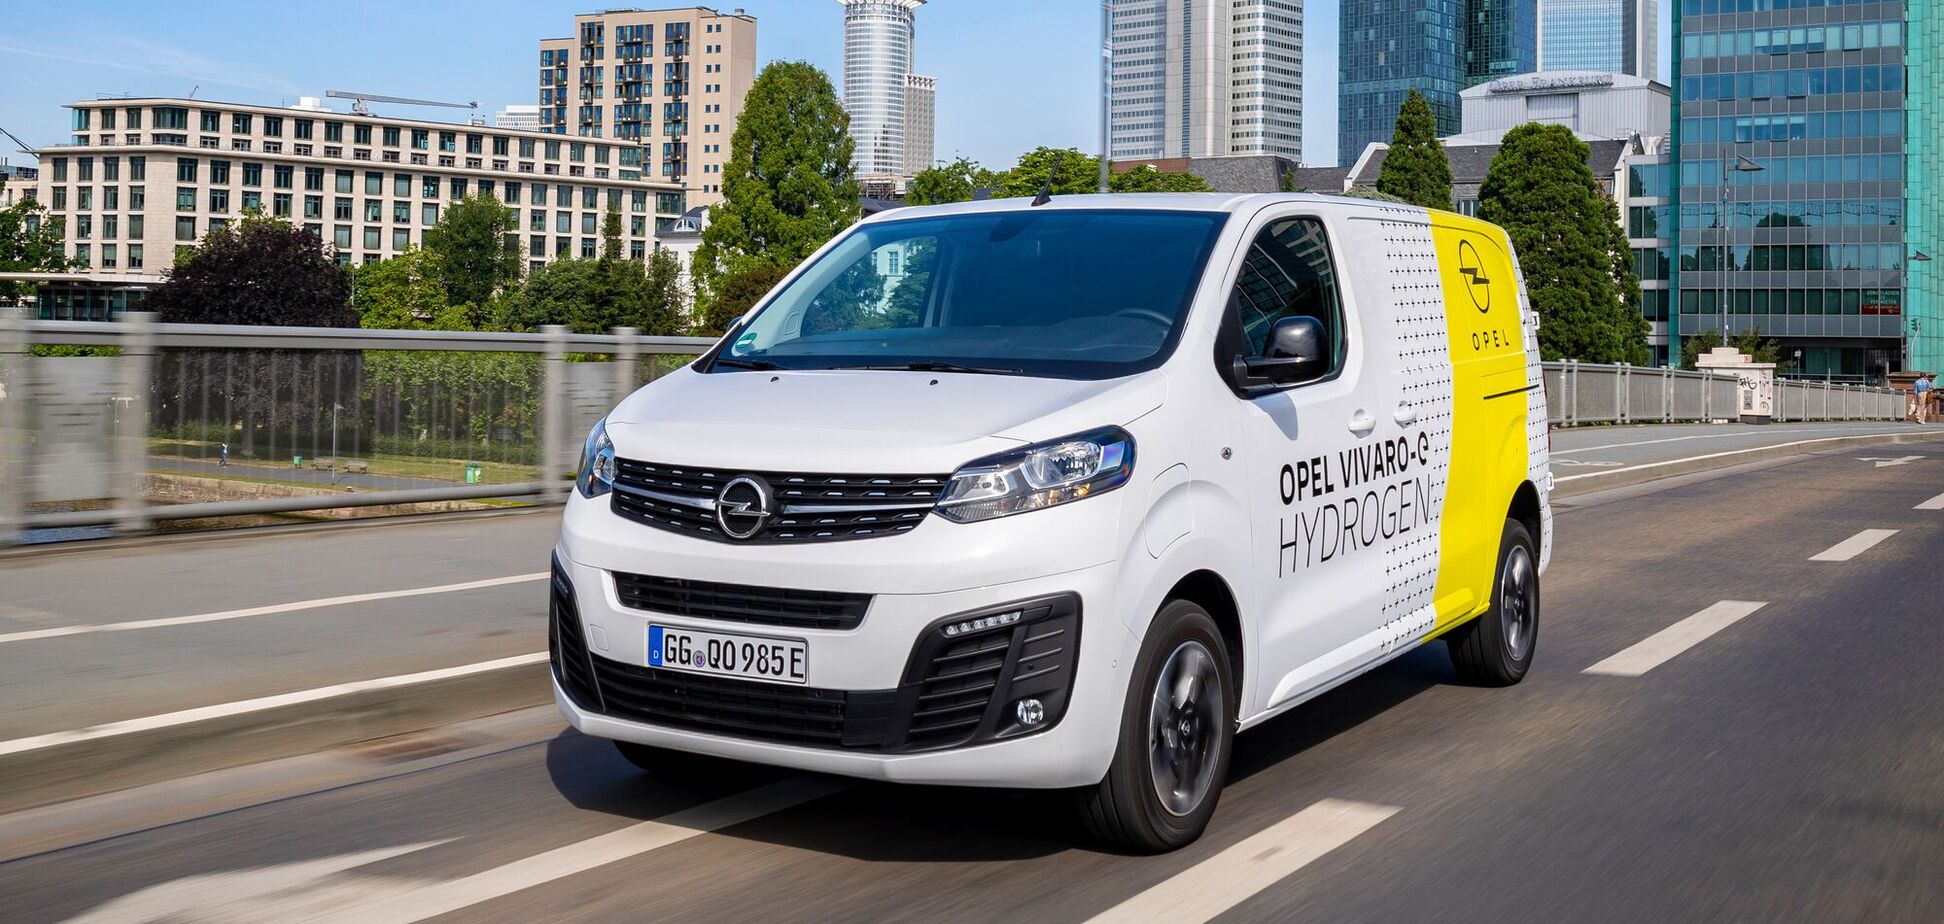 Opel представив водневий Vivaro-e Hydrogen